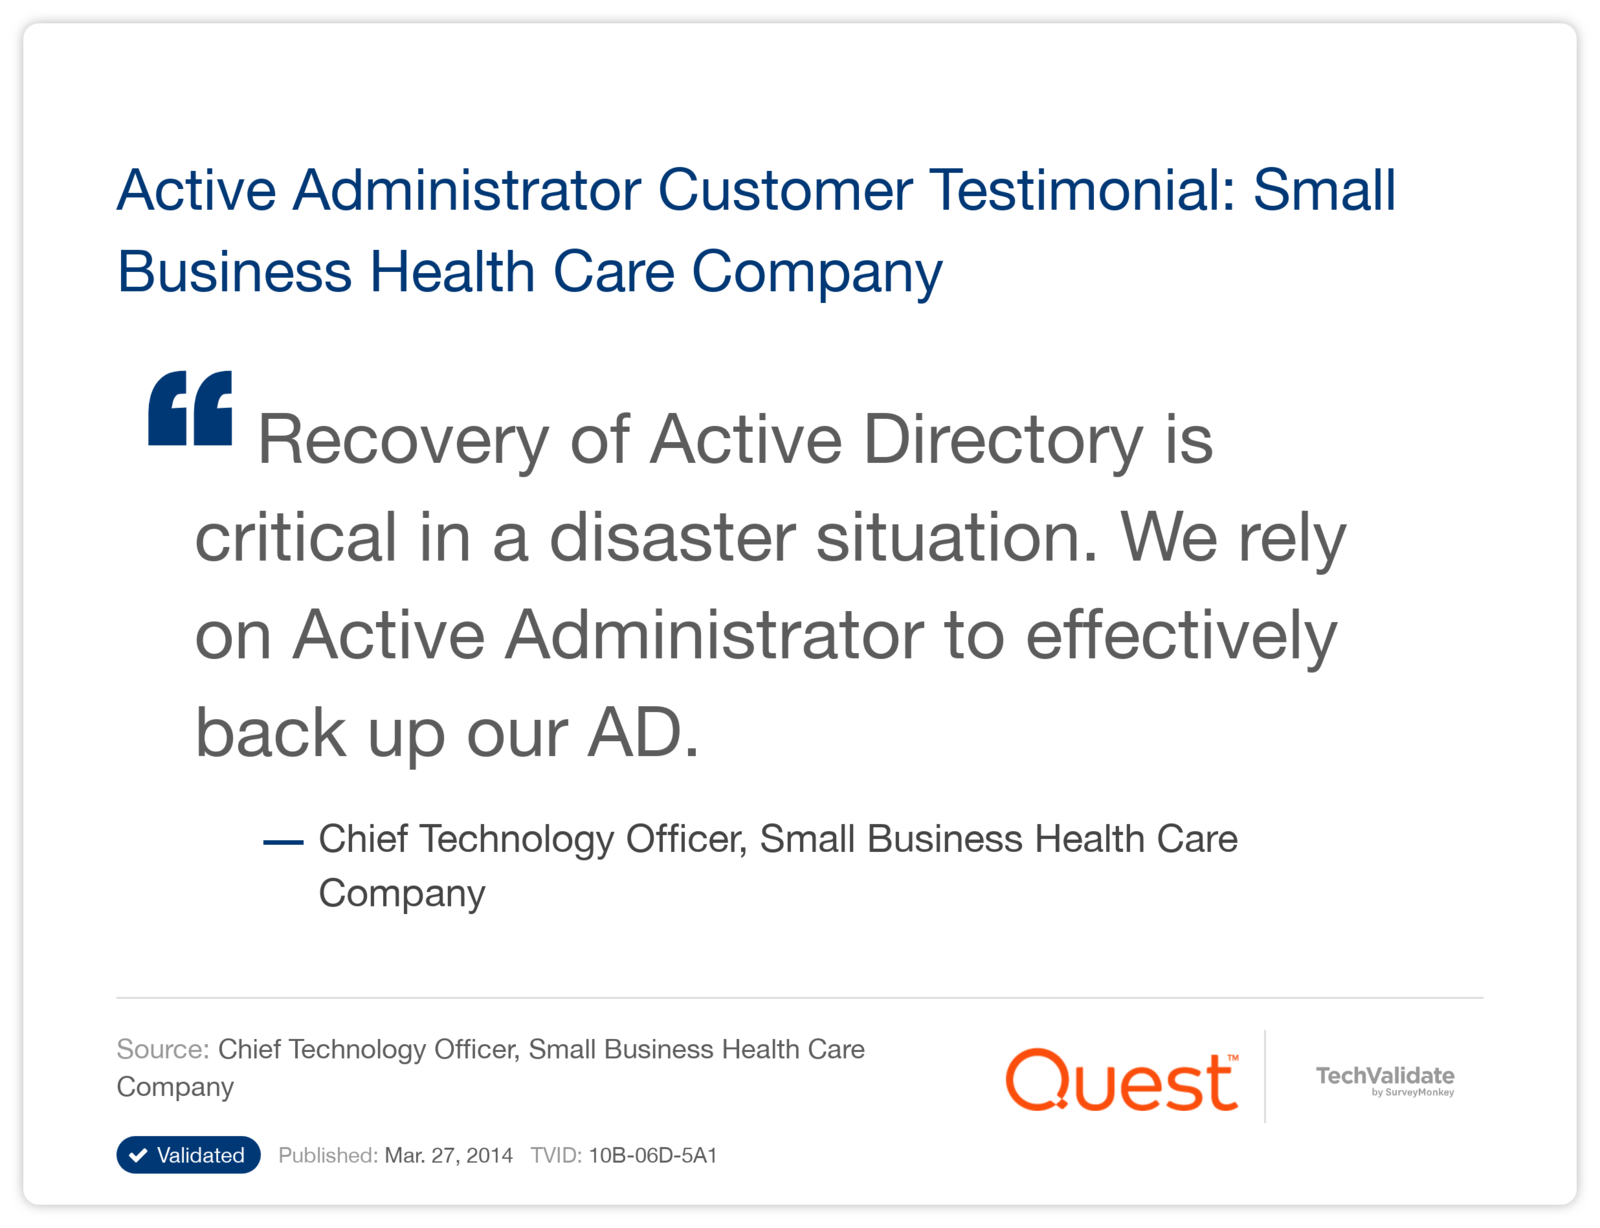 Active Administrator Customer Testimonial: Small Business Health Care Company